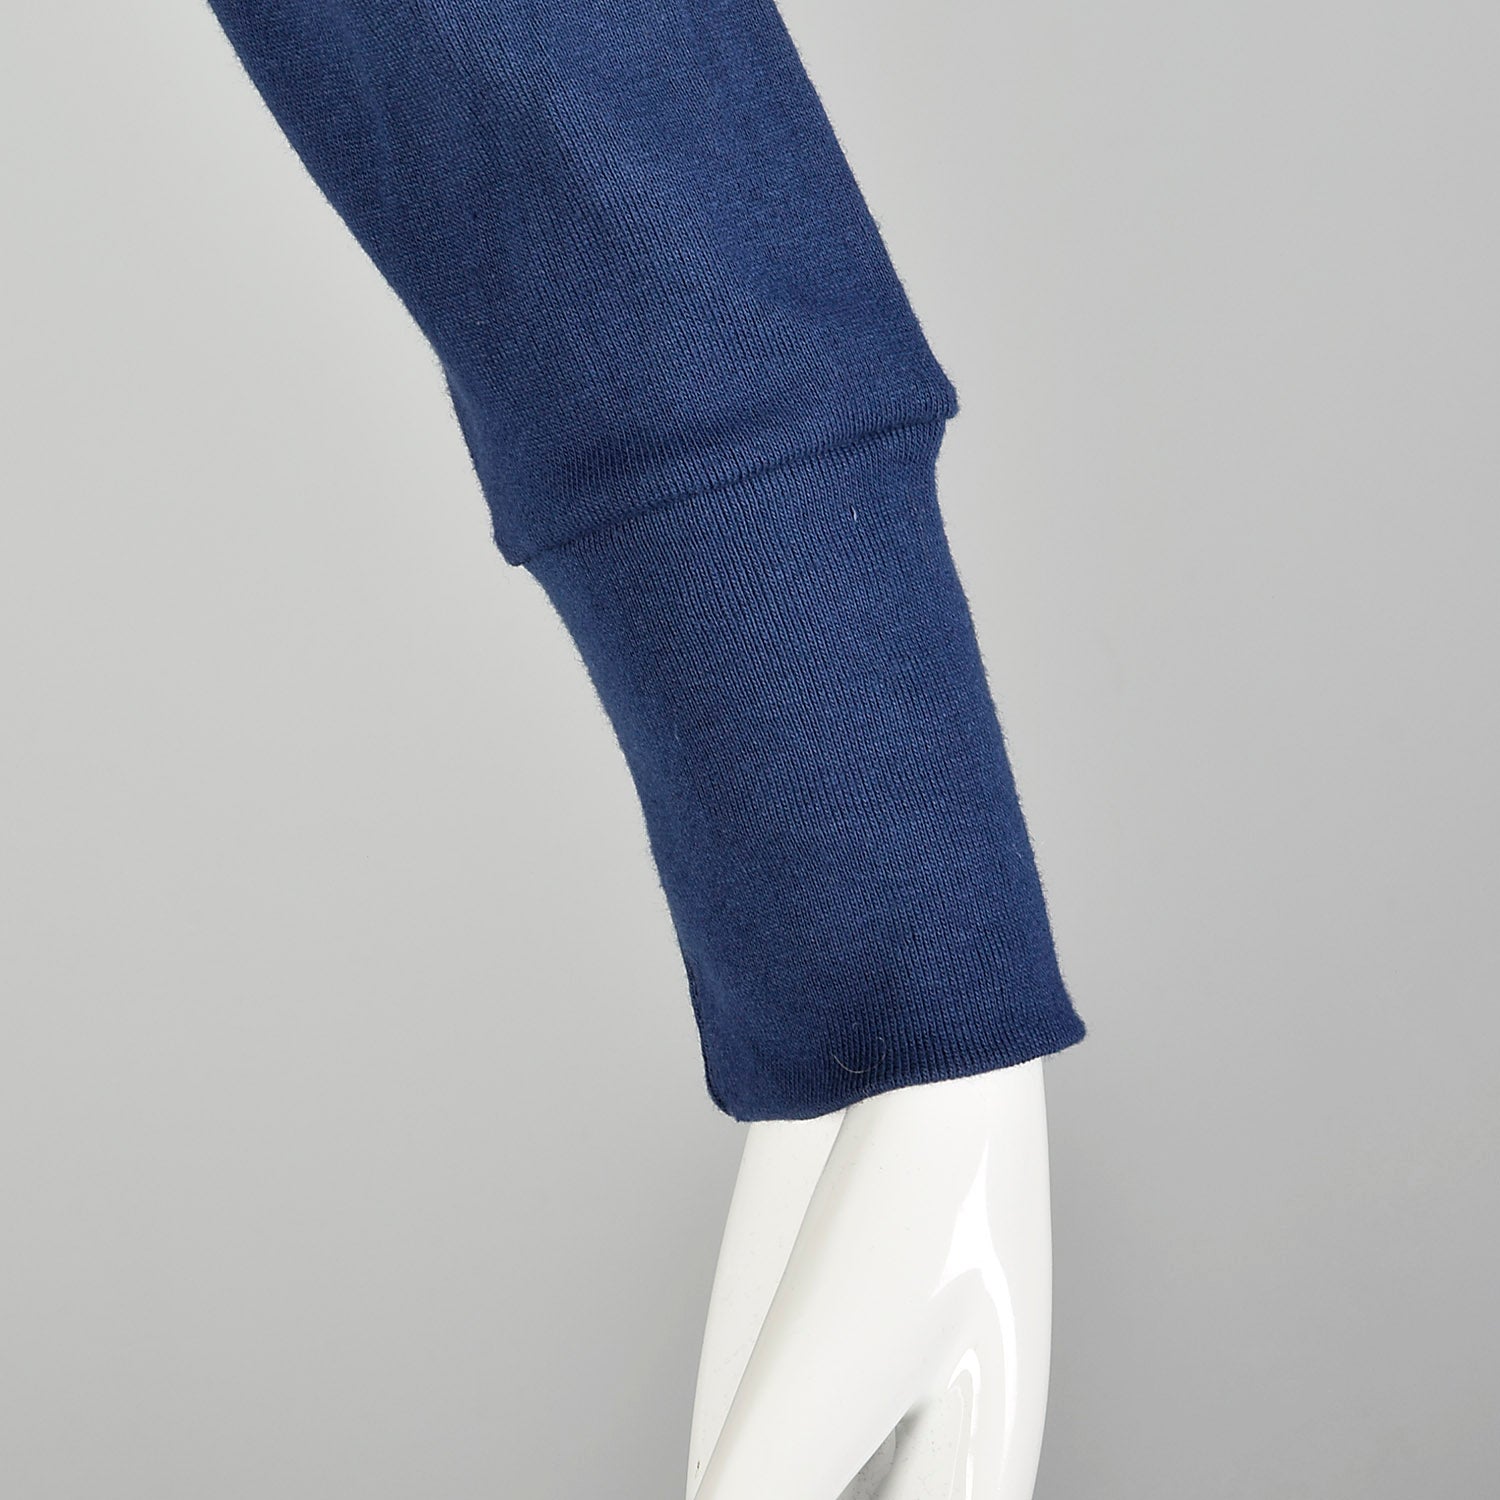 XS 1960s Deadstock Navy Blue Lightweight Long Sleeve Turtleneck Shirt